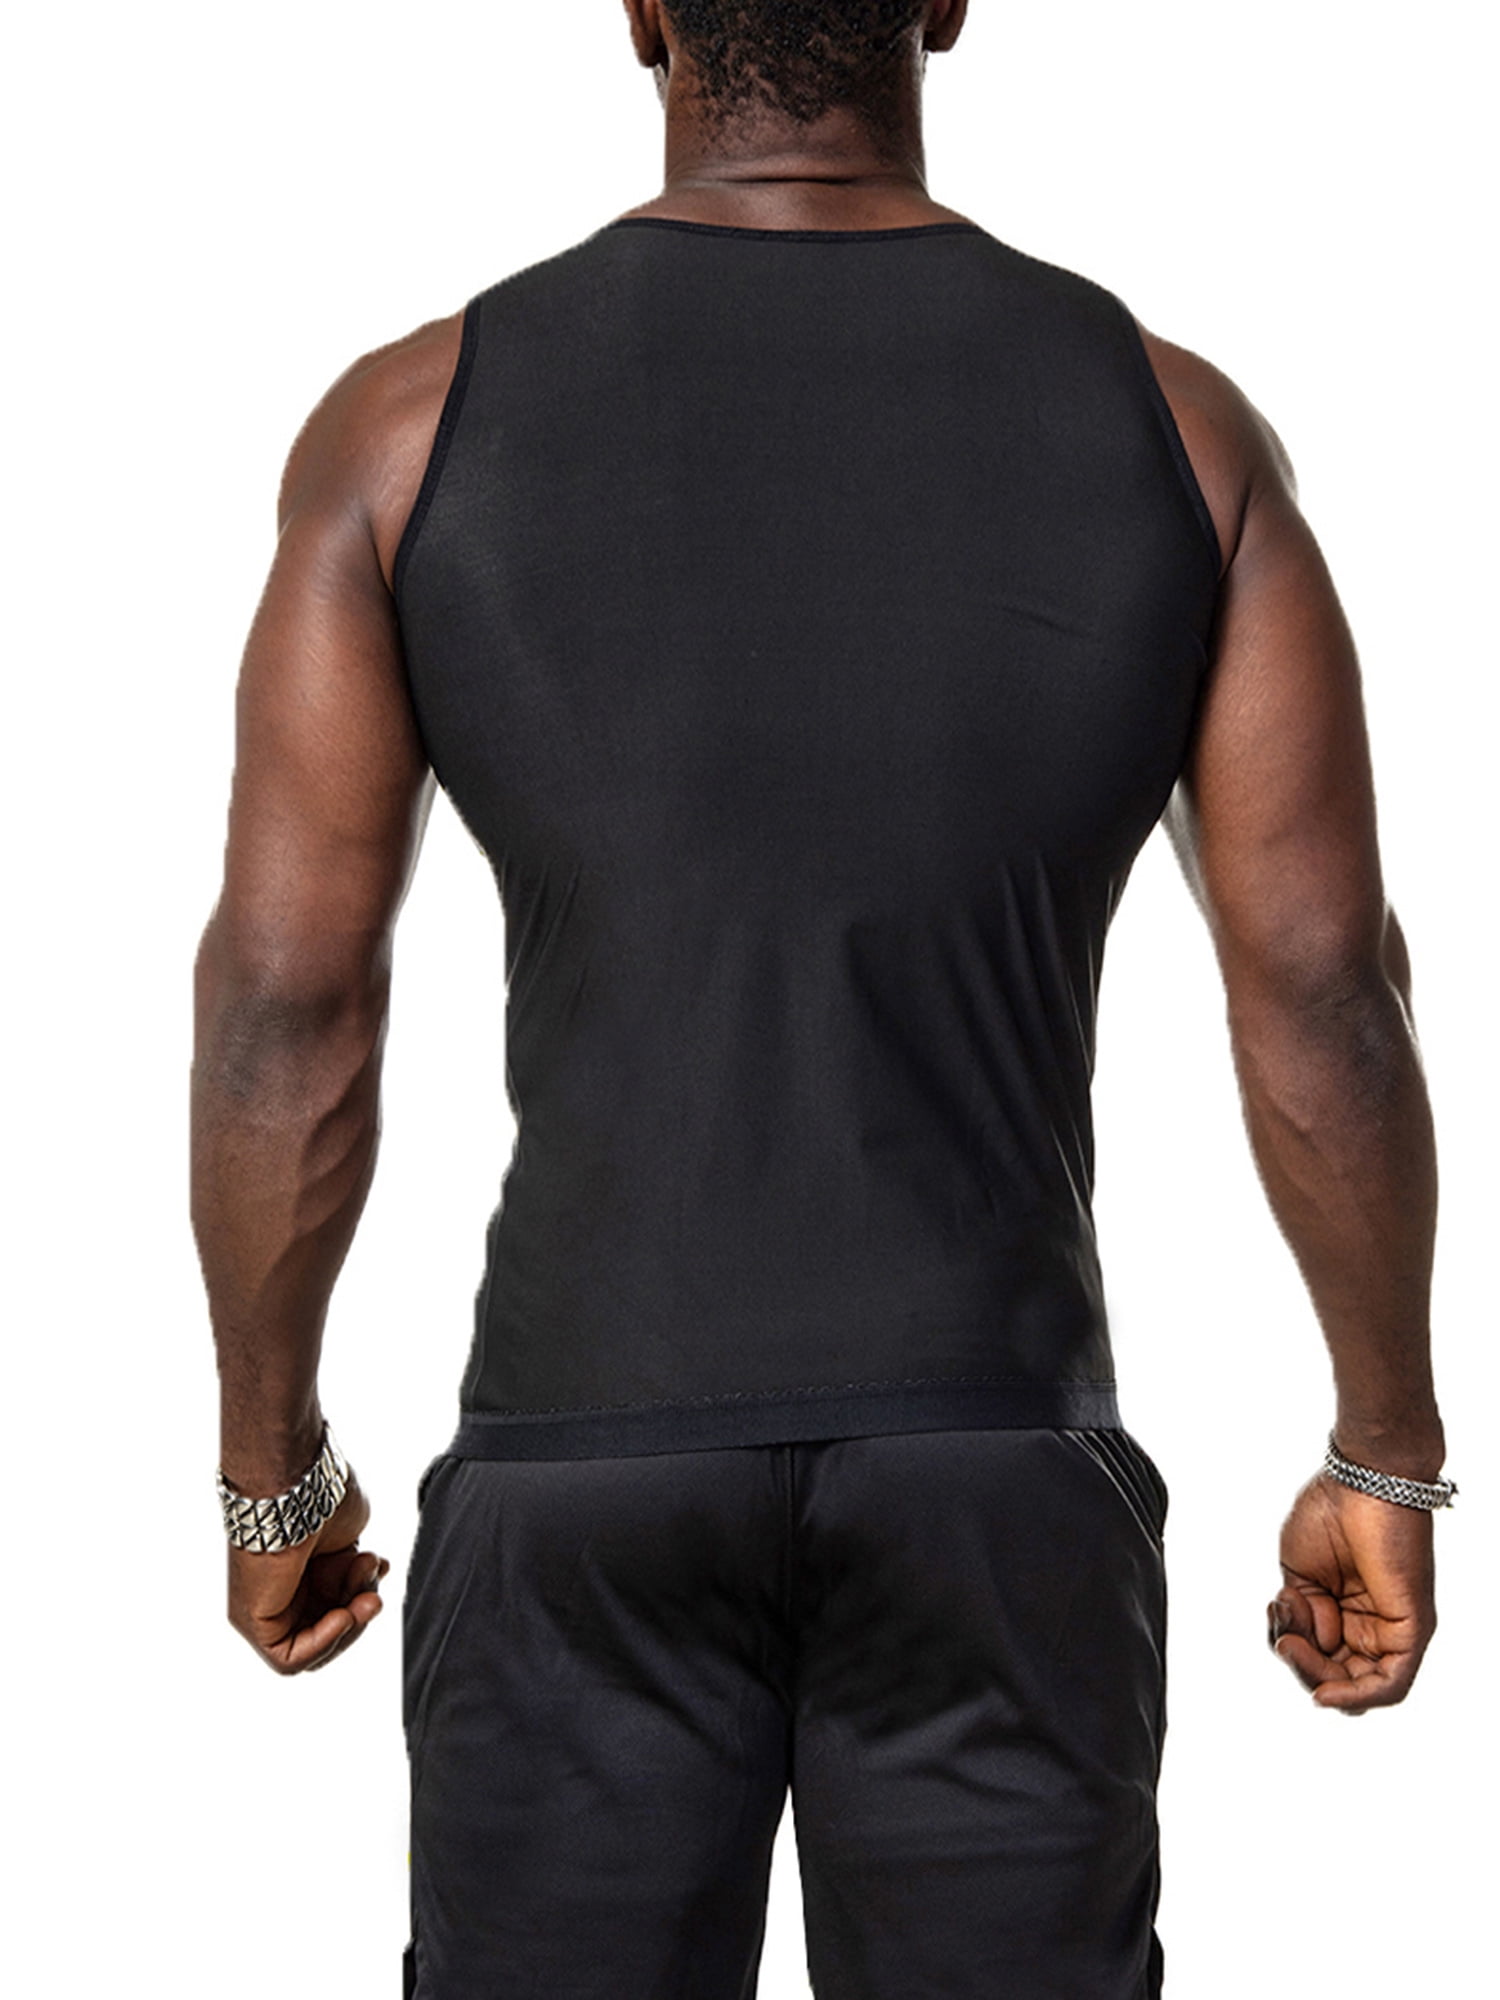 FANNYC Men Hot Sweat Sauna Workout Vest Waist Trainer Zipper Neoprene Tank  Top Compression Shirt Slimming Shapewear Gym Abs Abdomen Undershirts  ,Black/Grey 